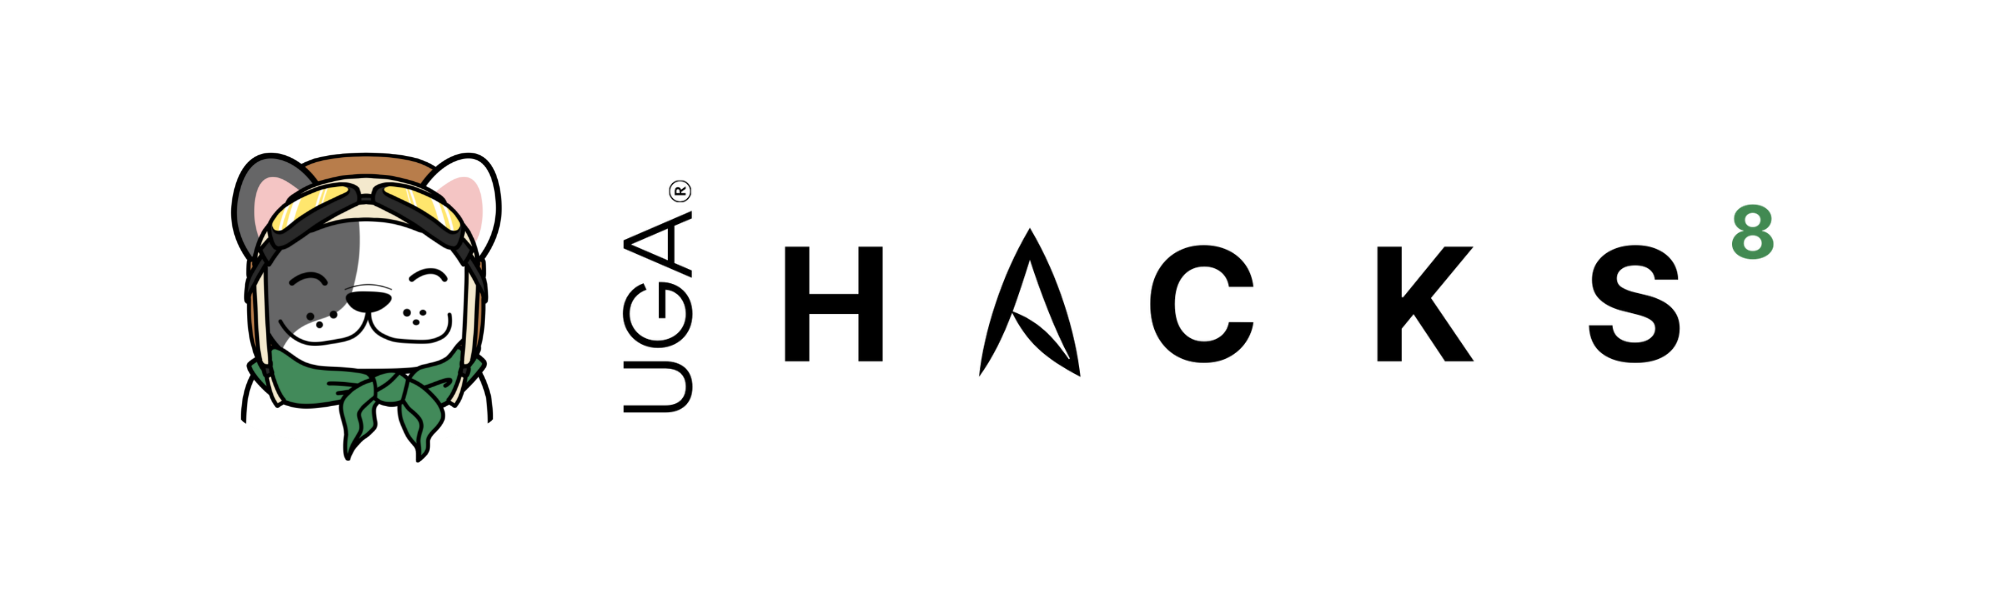 UGAHacks 8 Logo